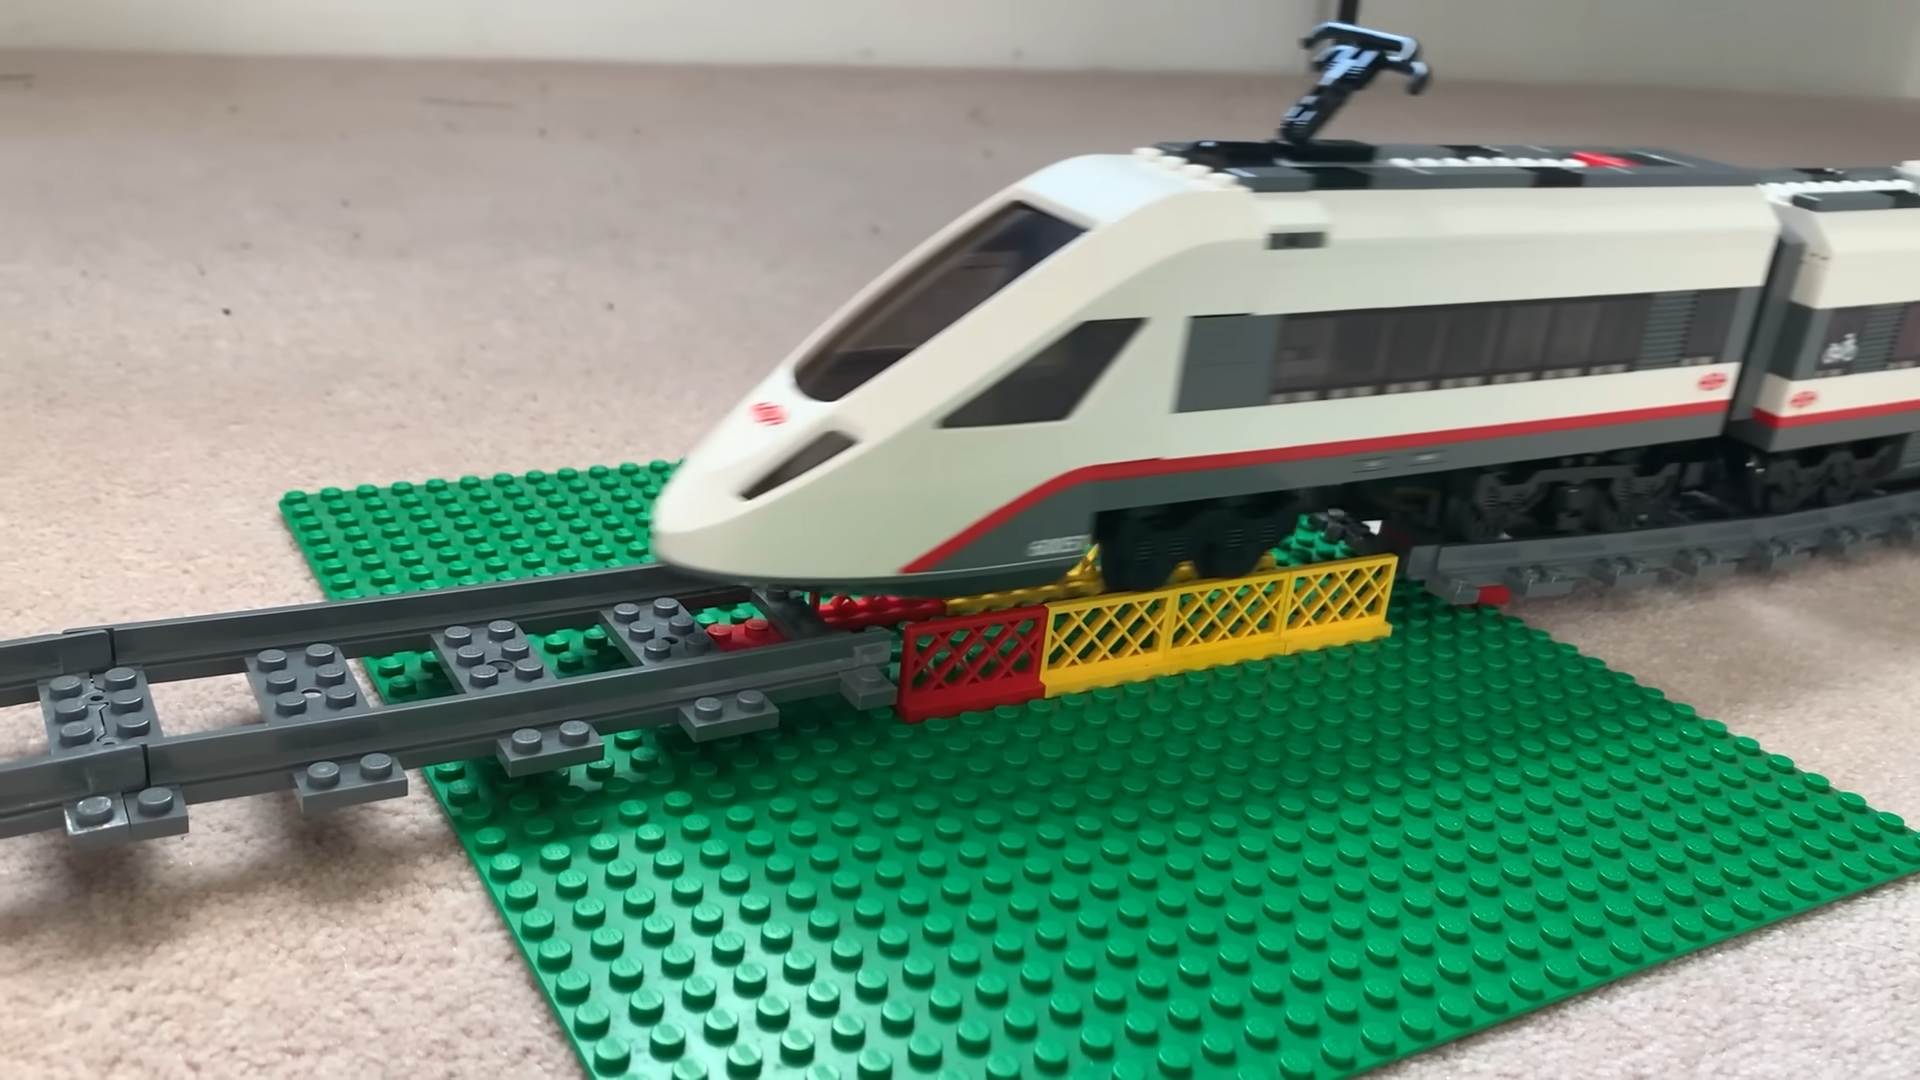 Building Lego Trains: Volume One